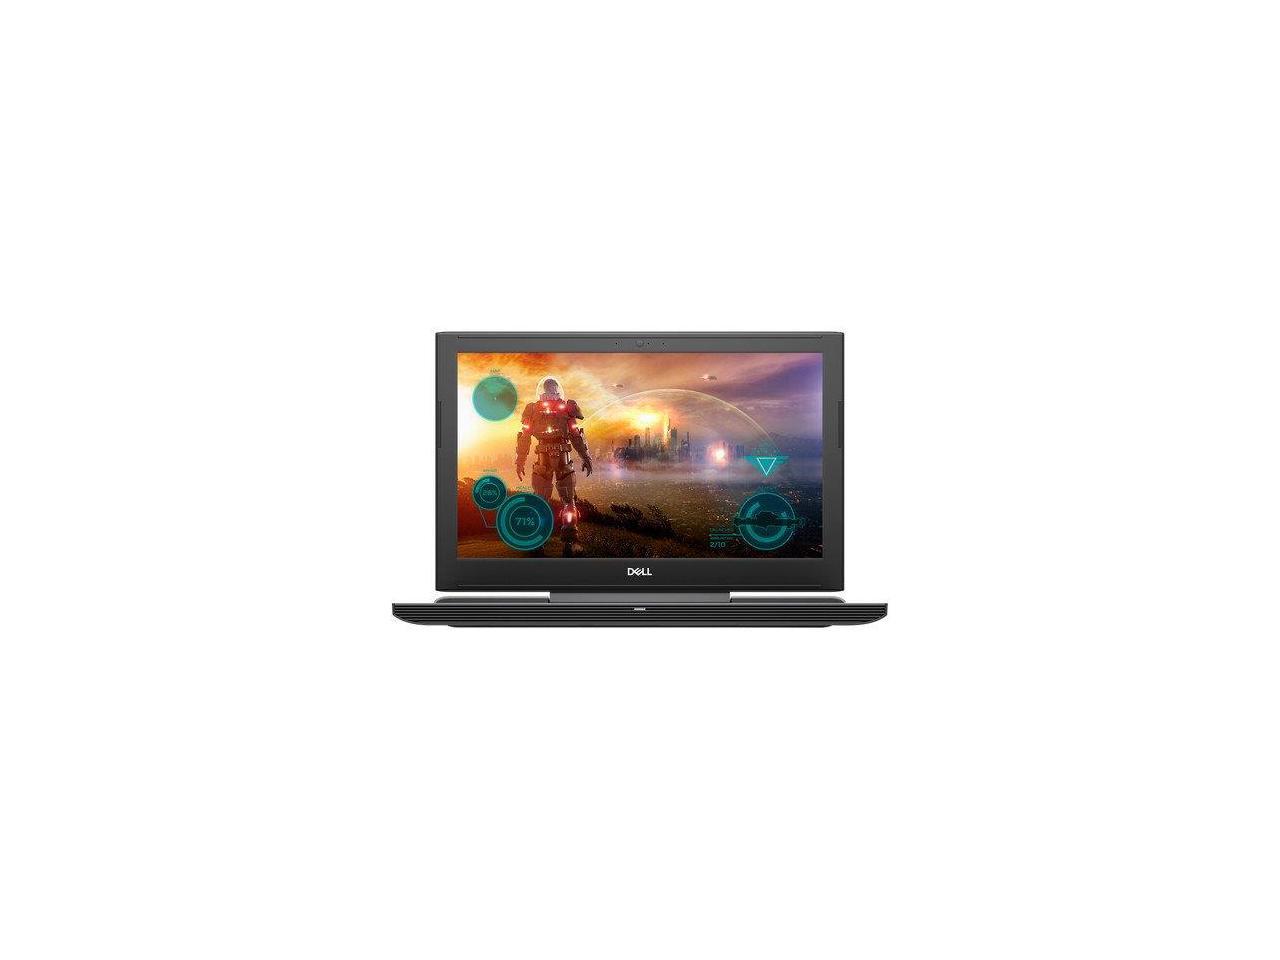 Dell Inspiron 7000 15.6" IPS FHD Gaming Laptop | VR Ready | Intel Quad Core i5-7300HQ | 16GB RAM 128GB SSD 500GB HDD | NVIDIA GeForce GTX 1060 6GB GDDR5 | Windows 10 Black